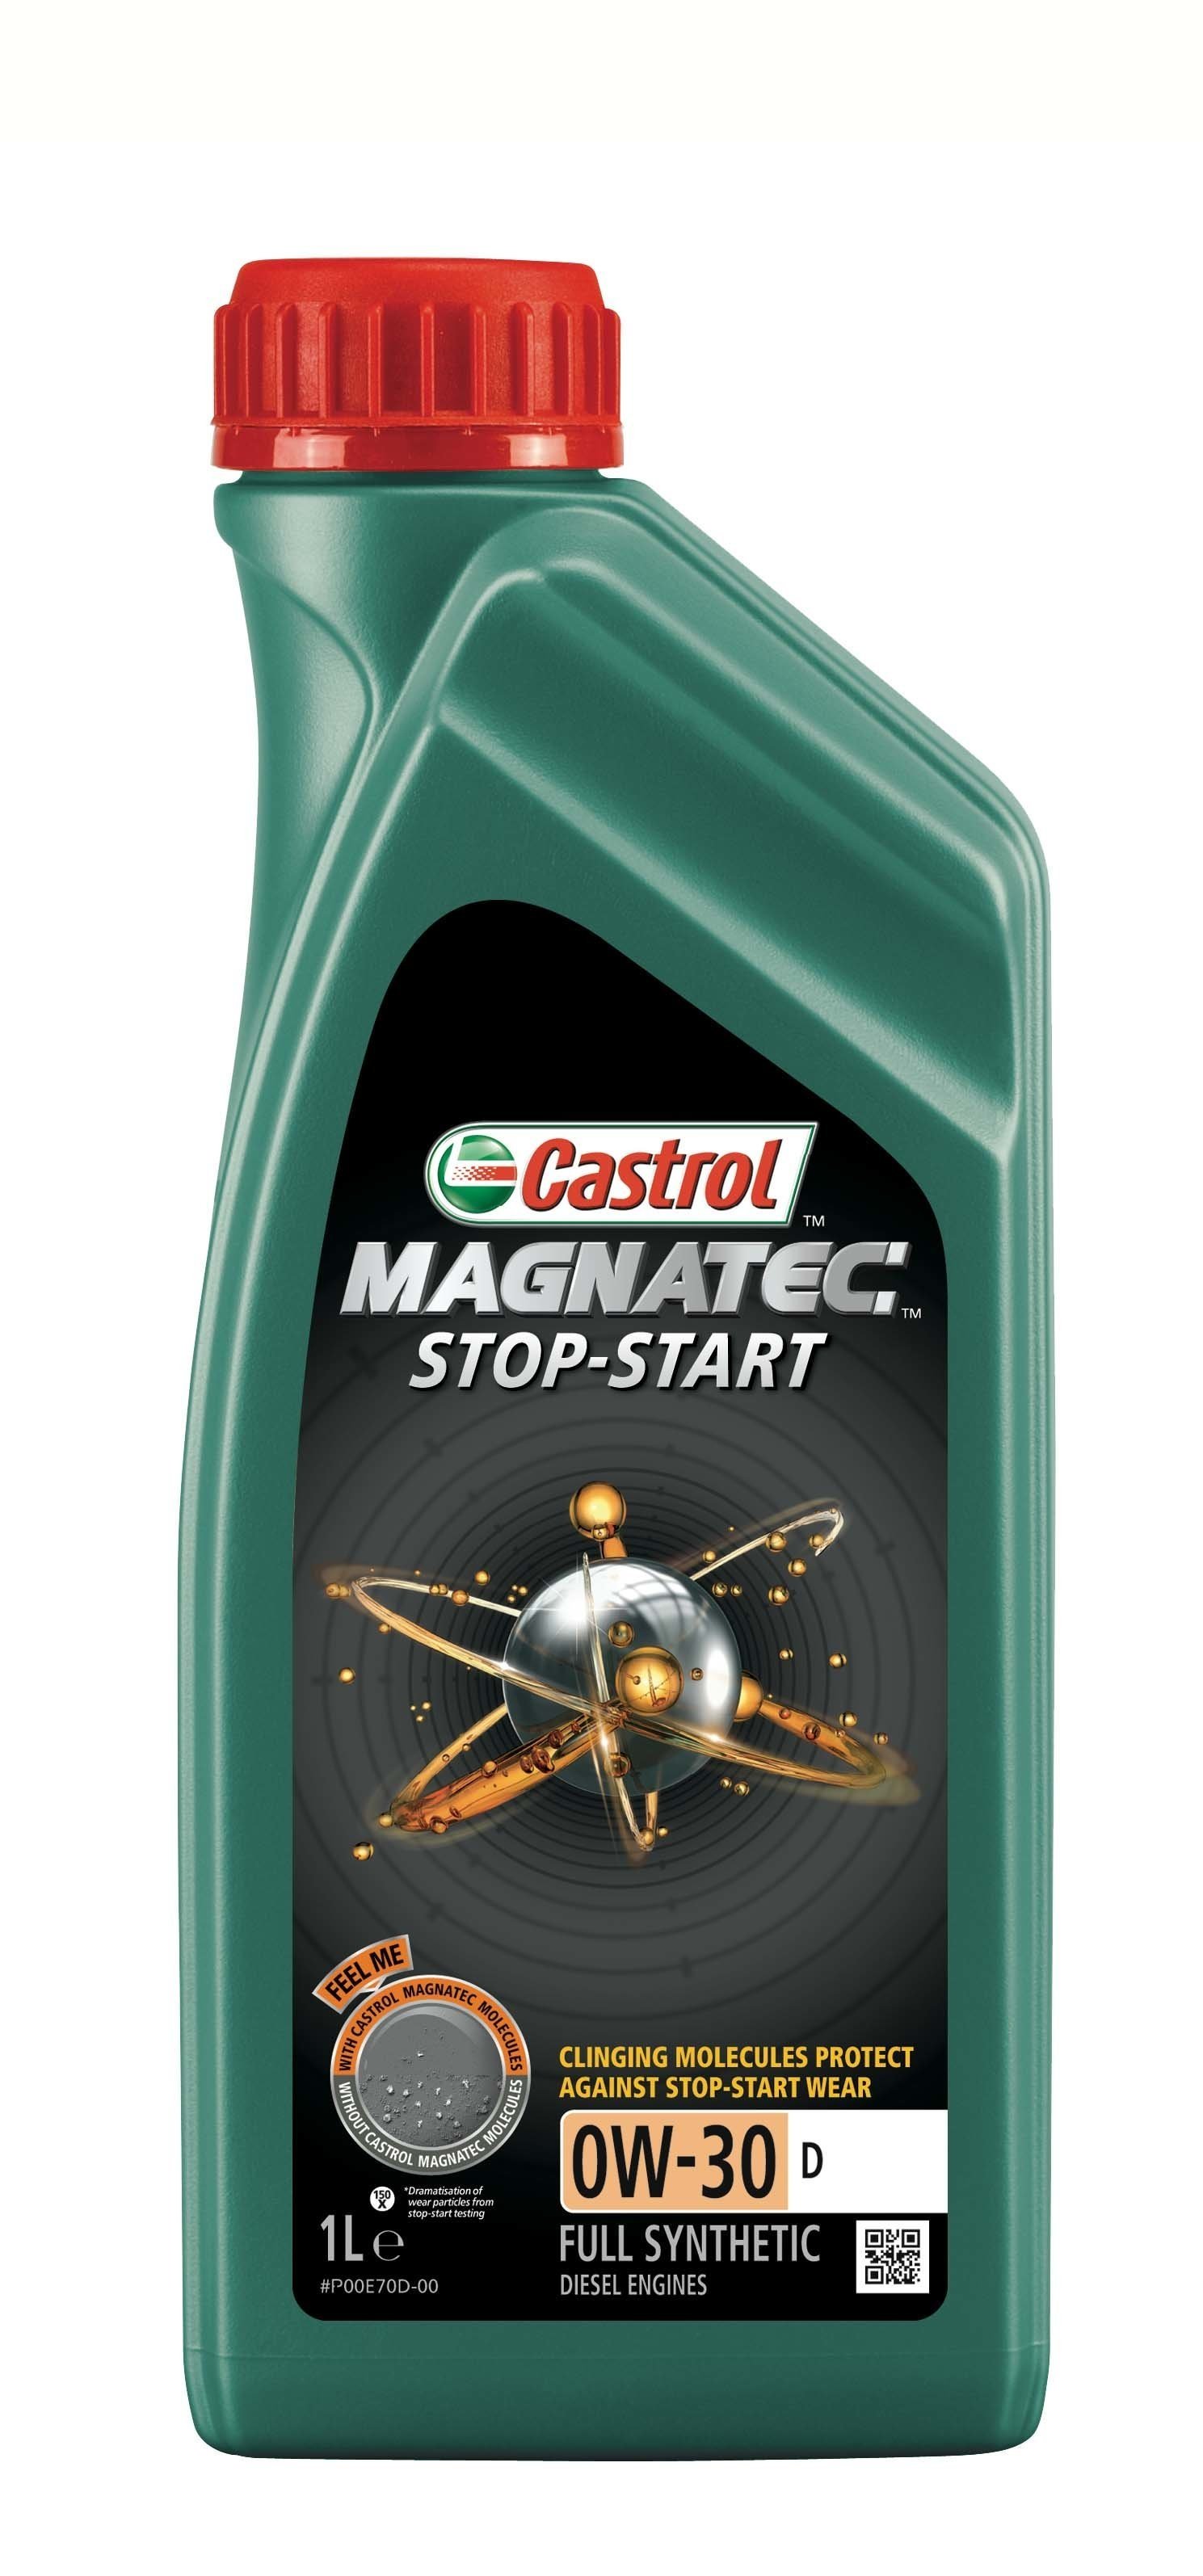  Magnatec Stop-Start 0W-30 D